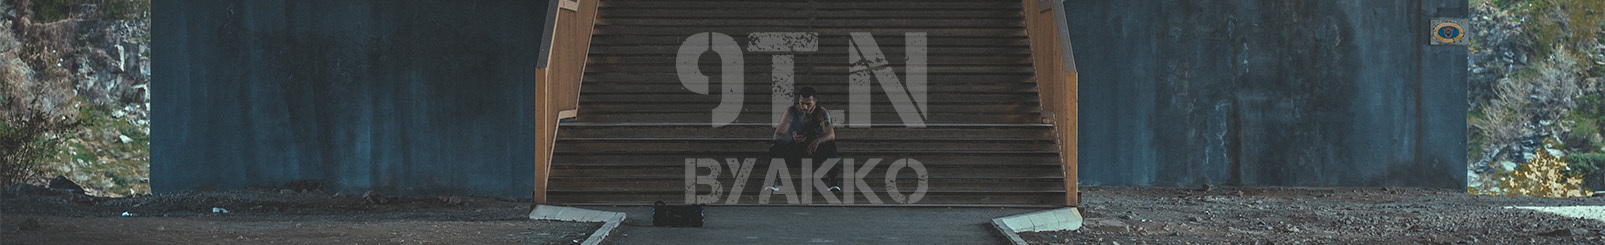 обложка автора Byakko 9T.n